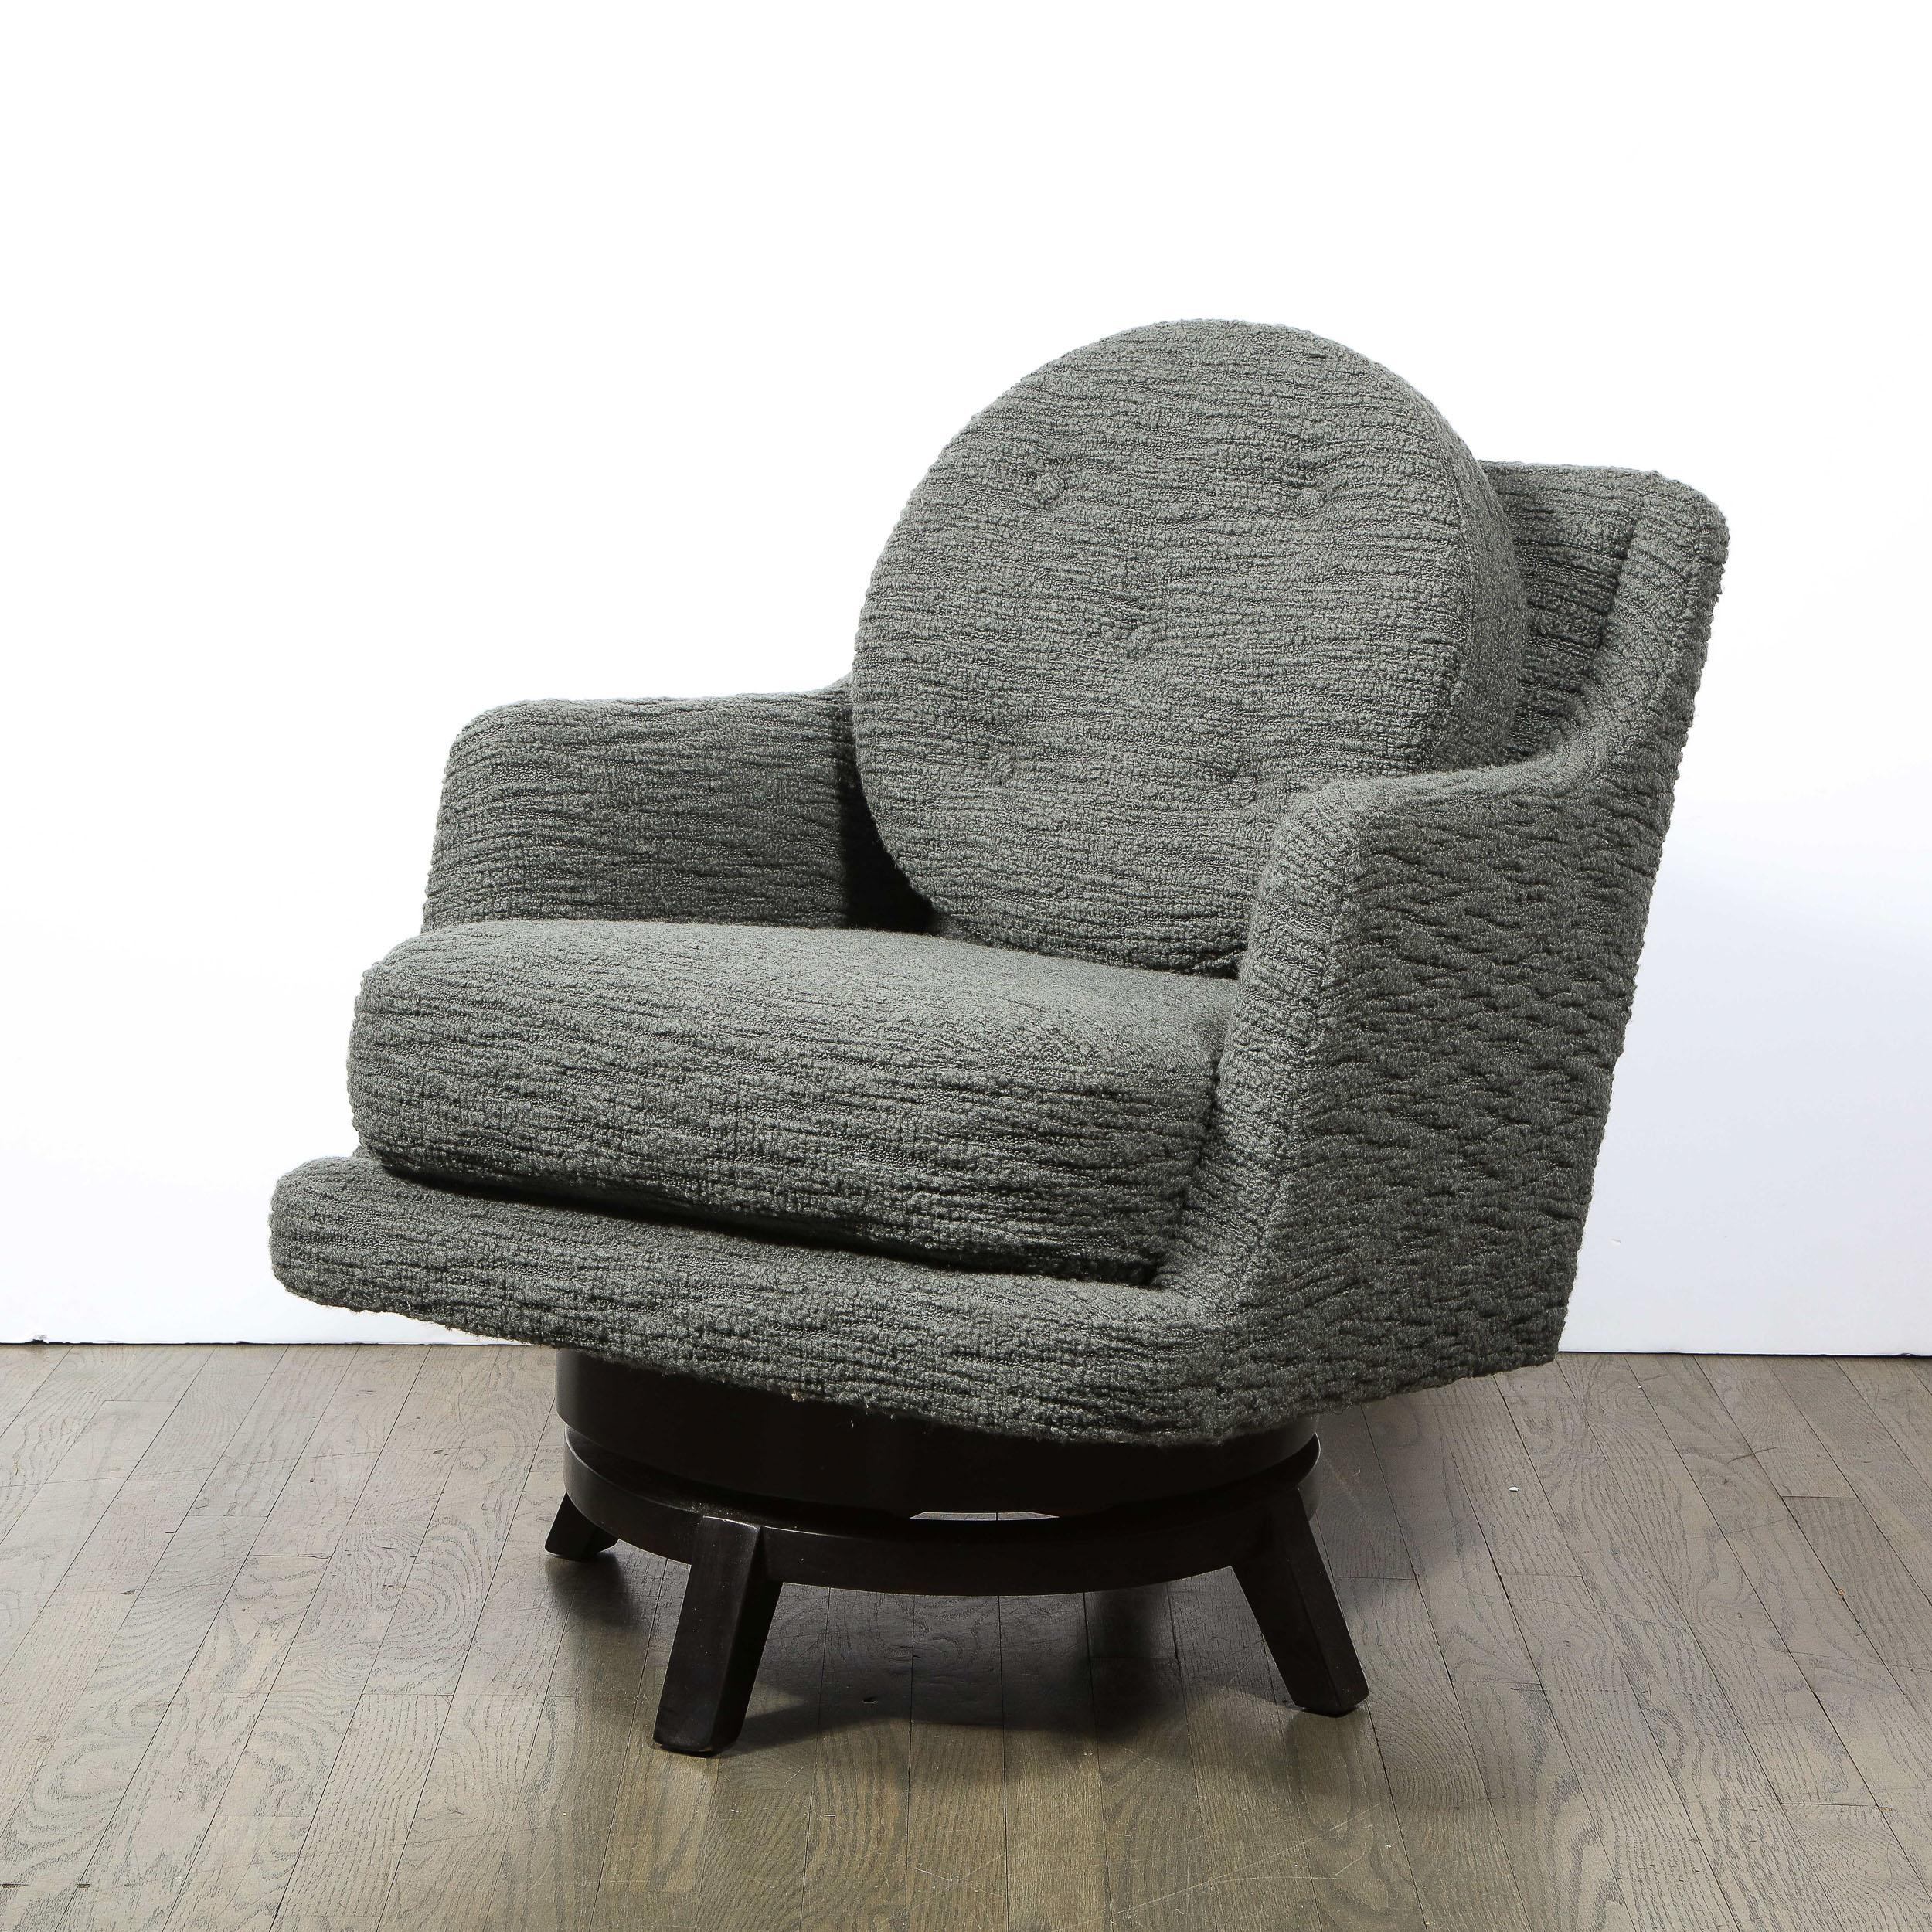 Pair of Edward Wormley Swivel Chairs 'Model #5609' for Dunbar 1